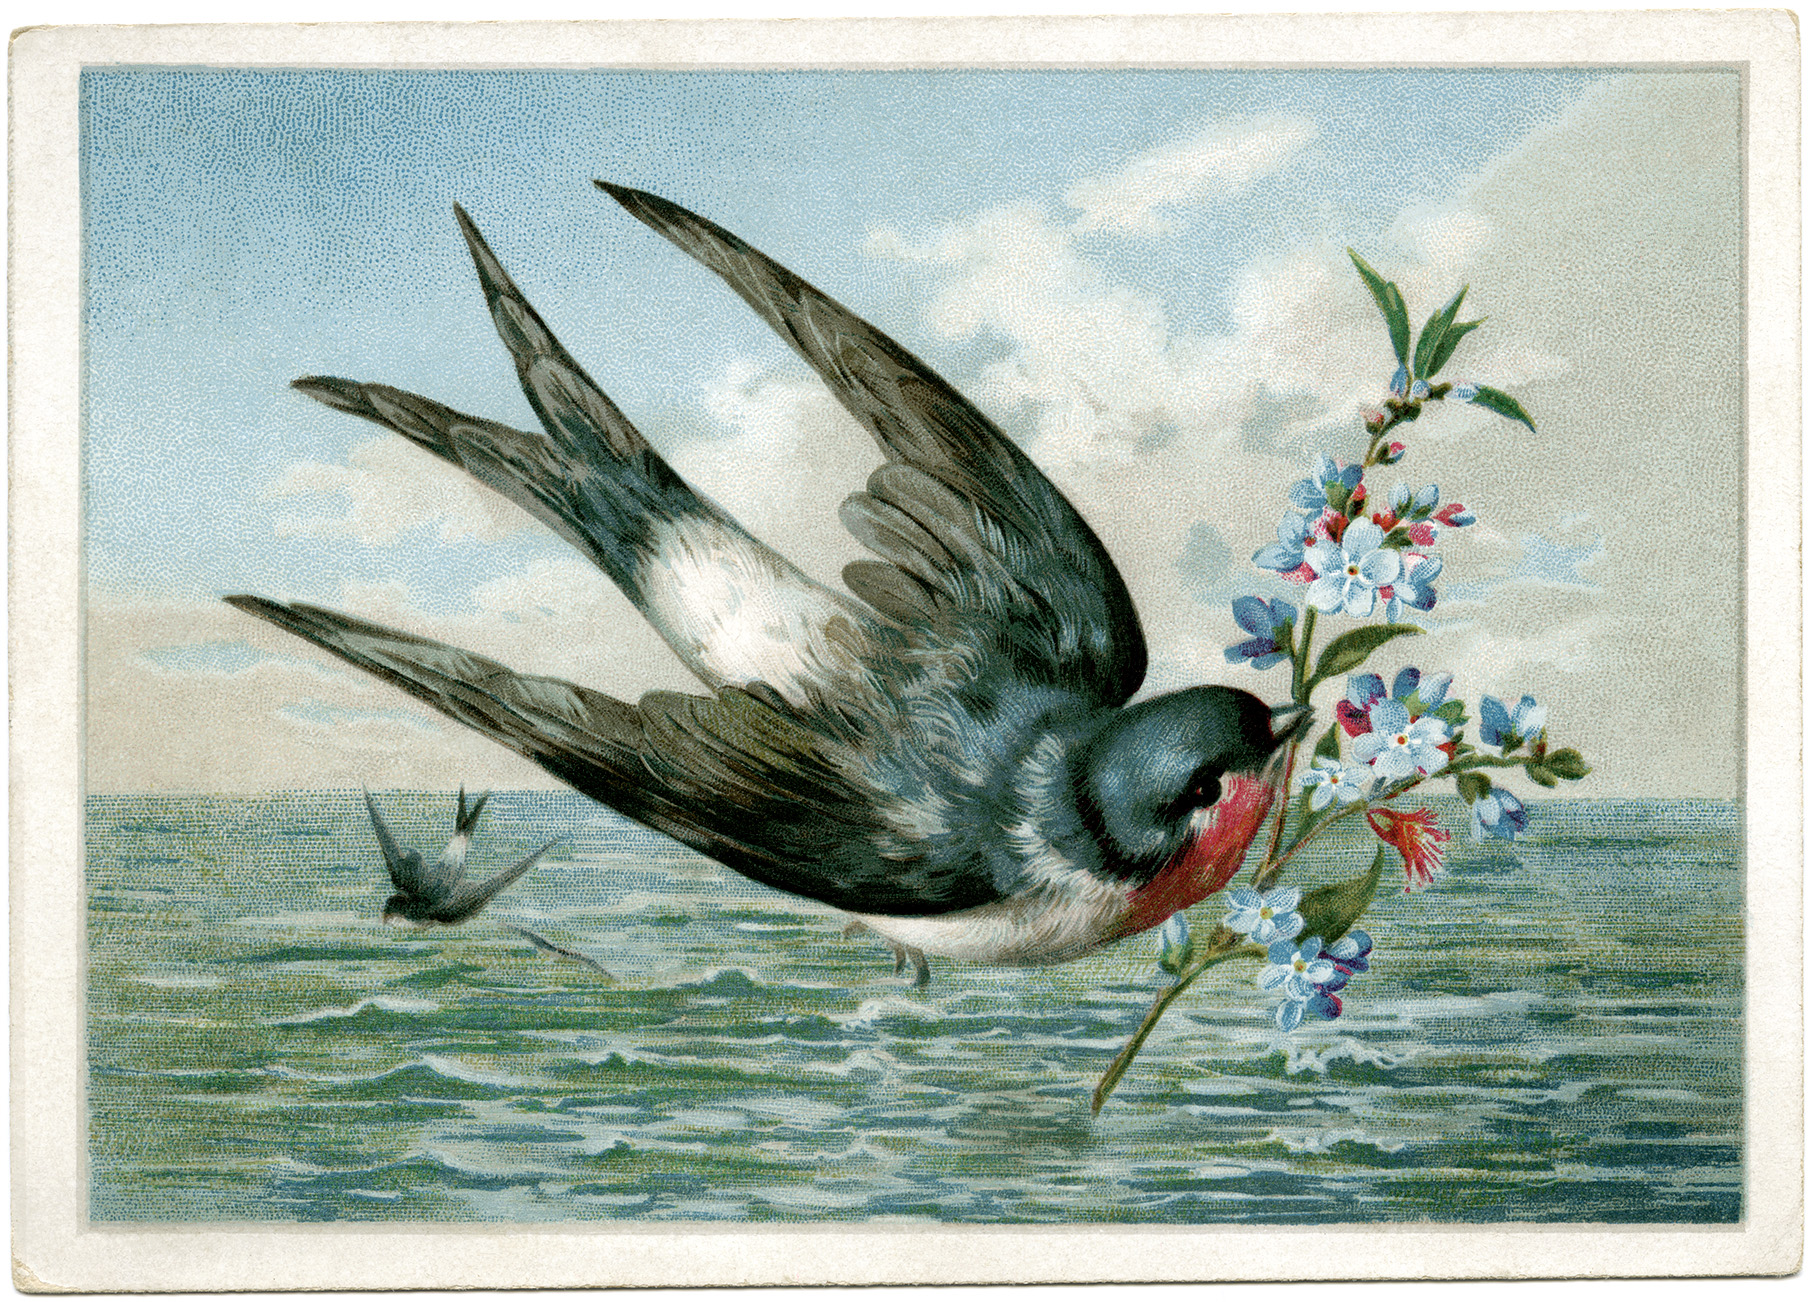 vintage bird clip art, bird carrying branch, printable bird card, bird flying over water illustration, free vintage ephemera graphics